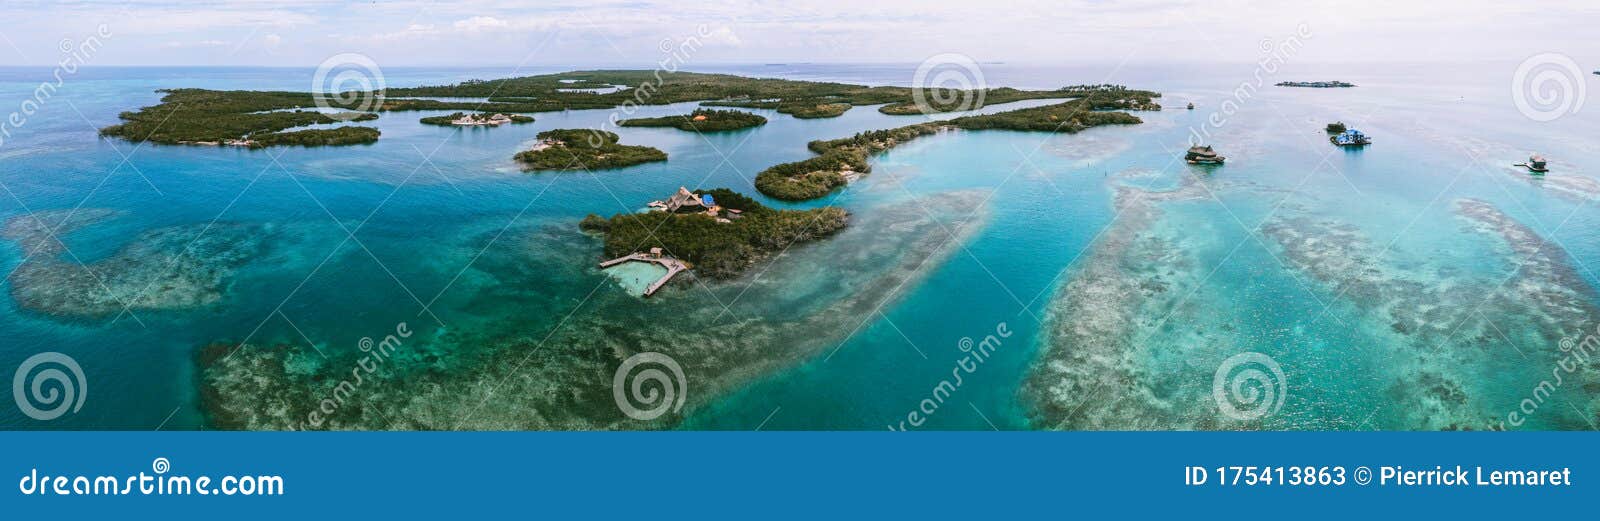 tintinpan and isla mucura in san bernardo islands, on colombia`s caribbean coast